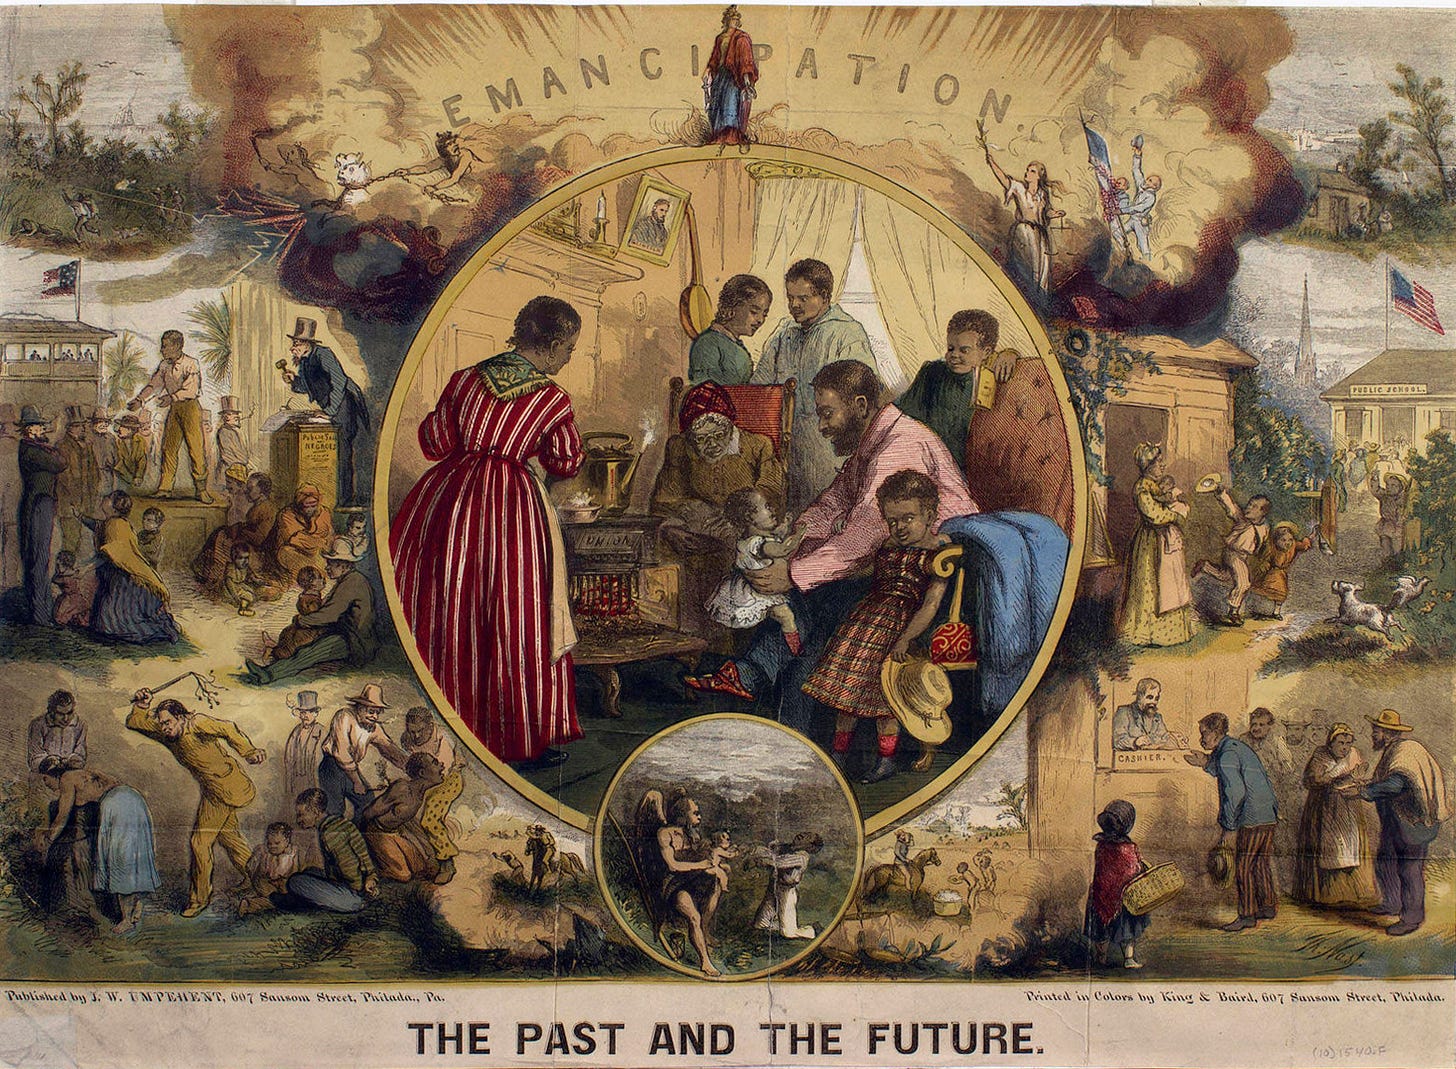 The Dream of Emancipation American Inquiry